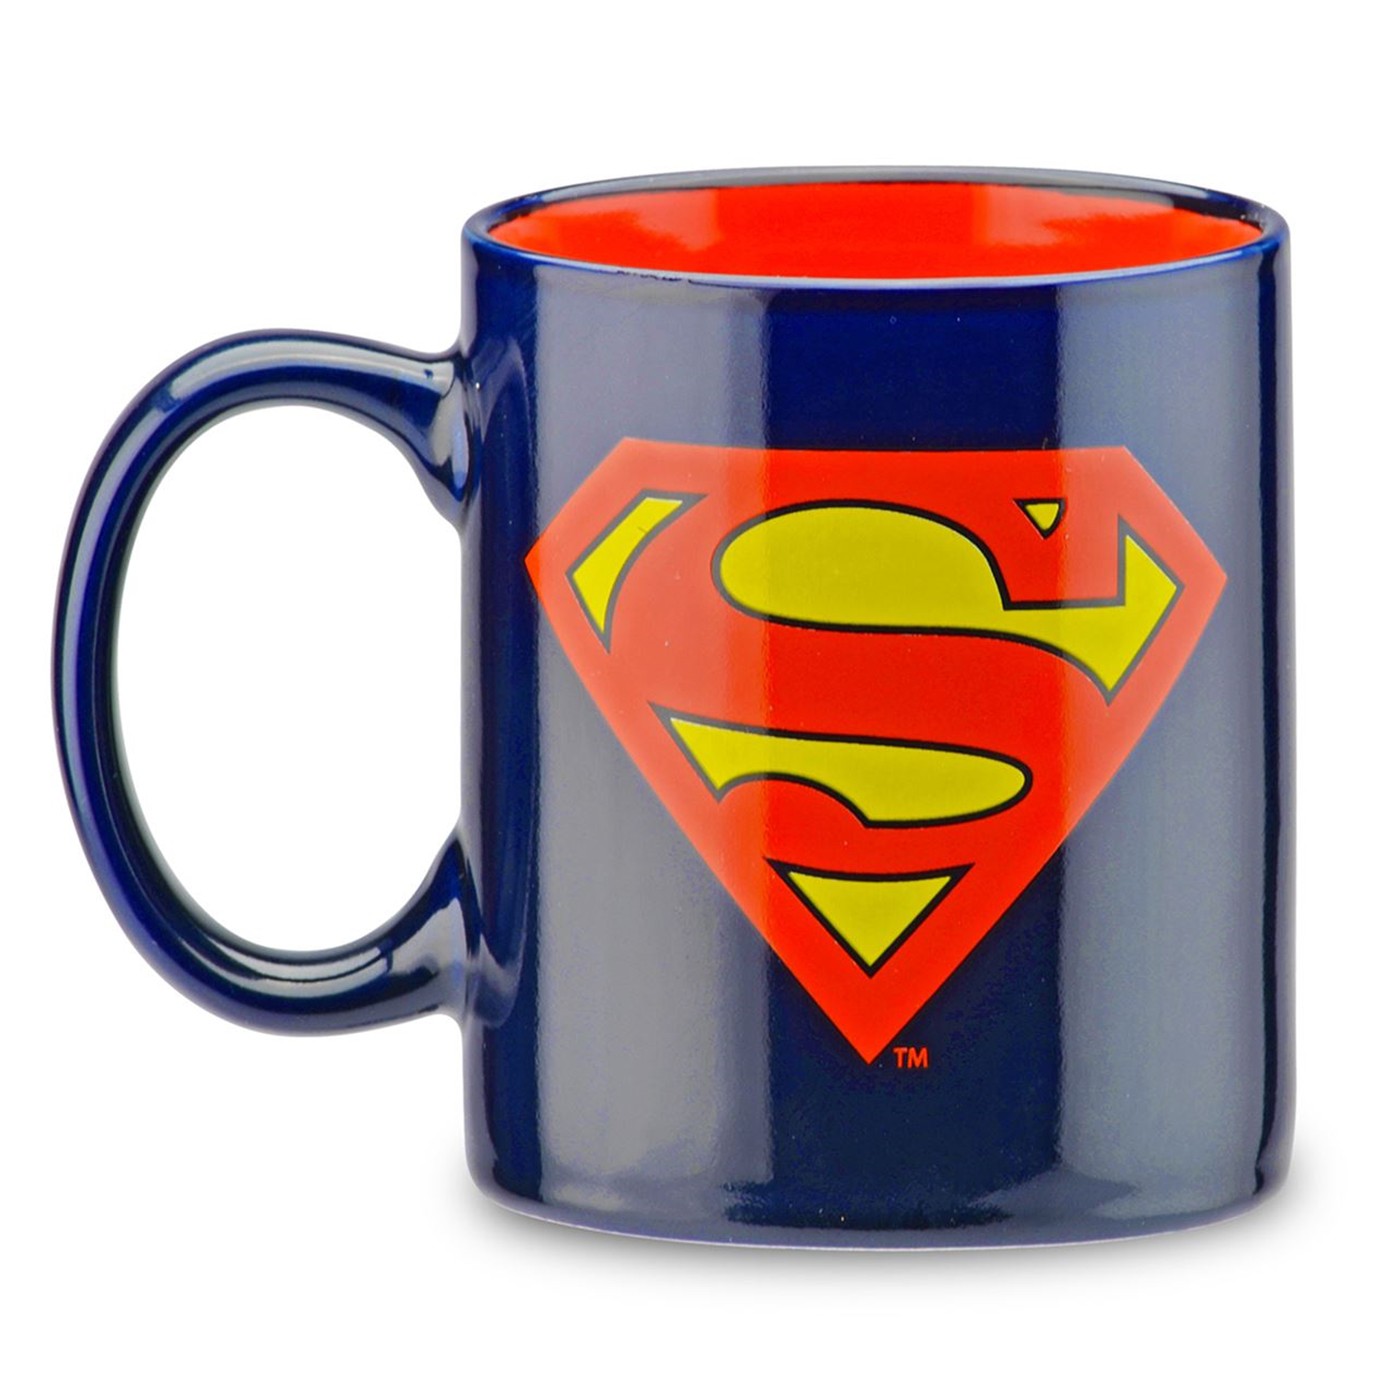 Superman 1-Cup Coffee Maker with Mug